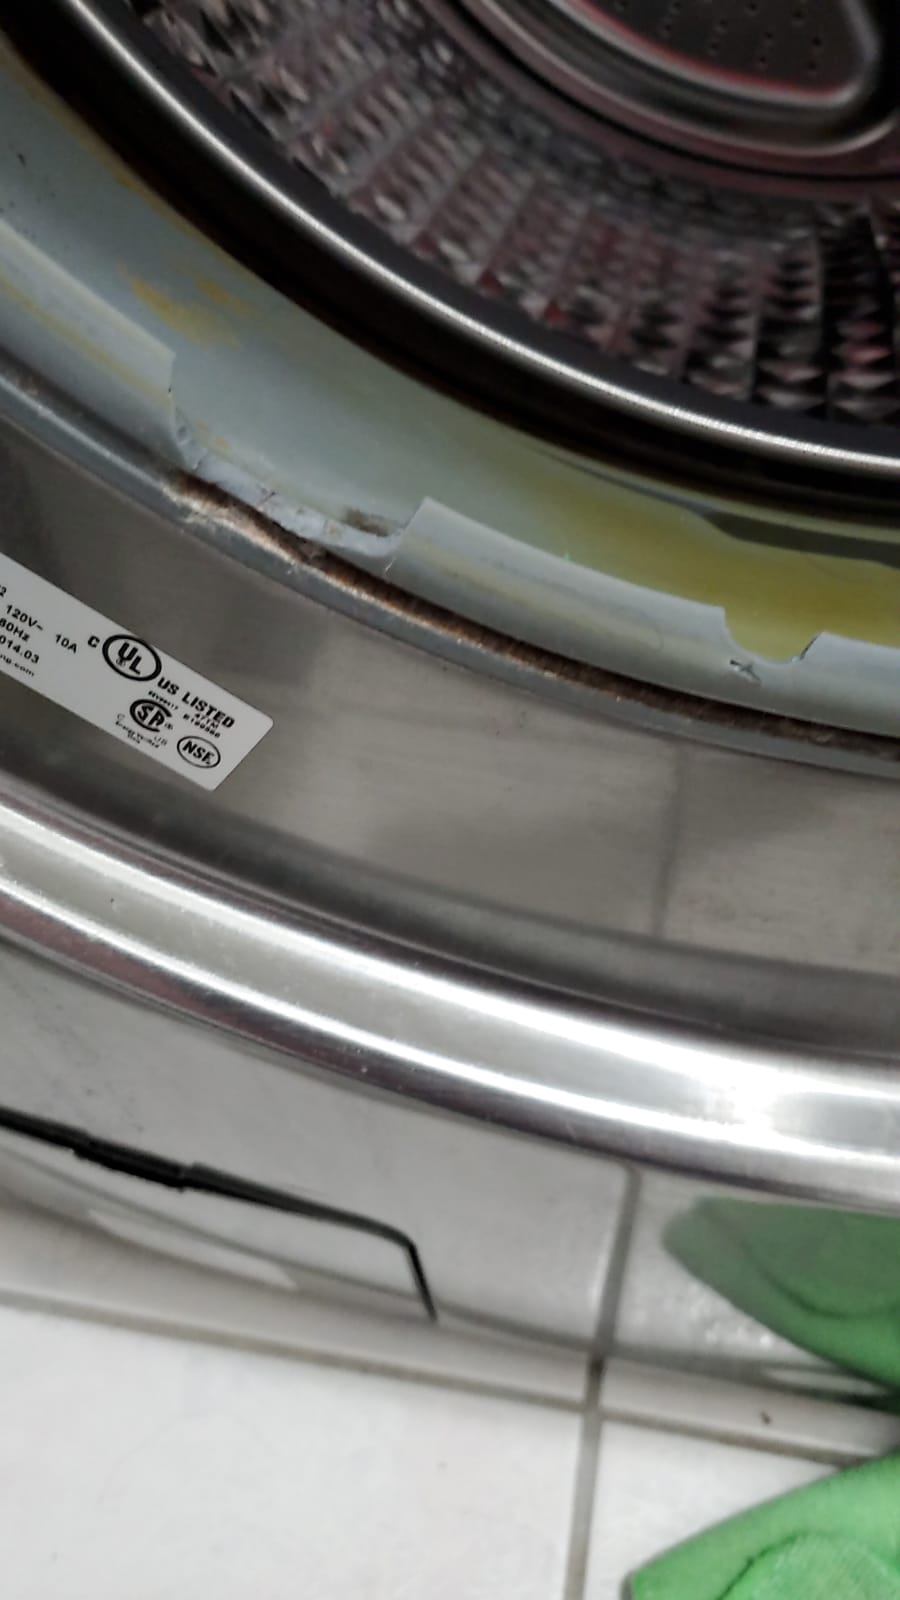 Washing machine repair - replacing cracked door seal